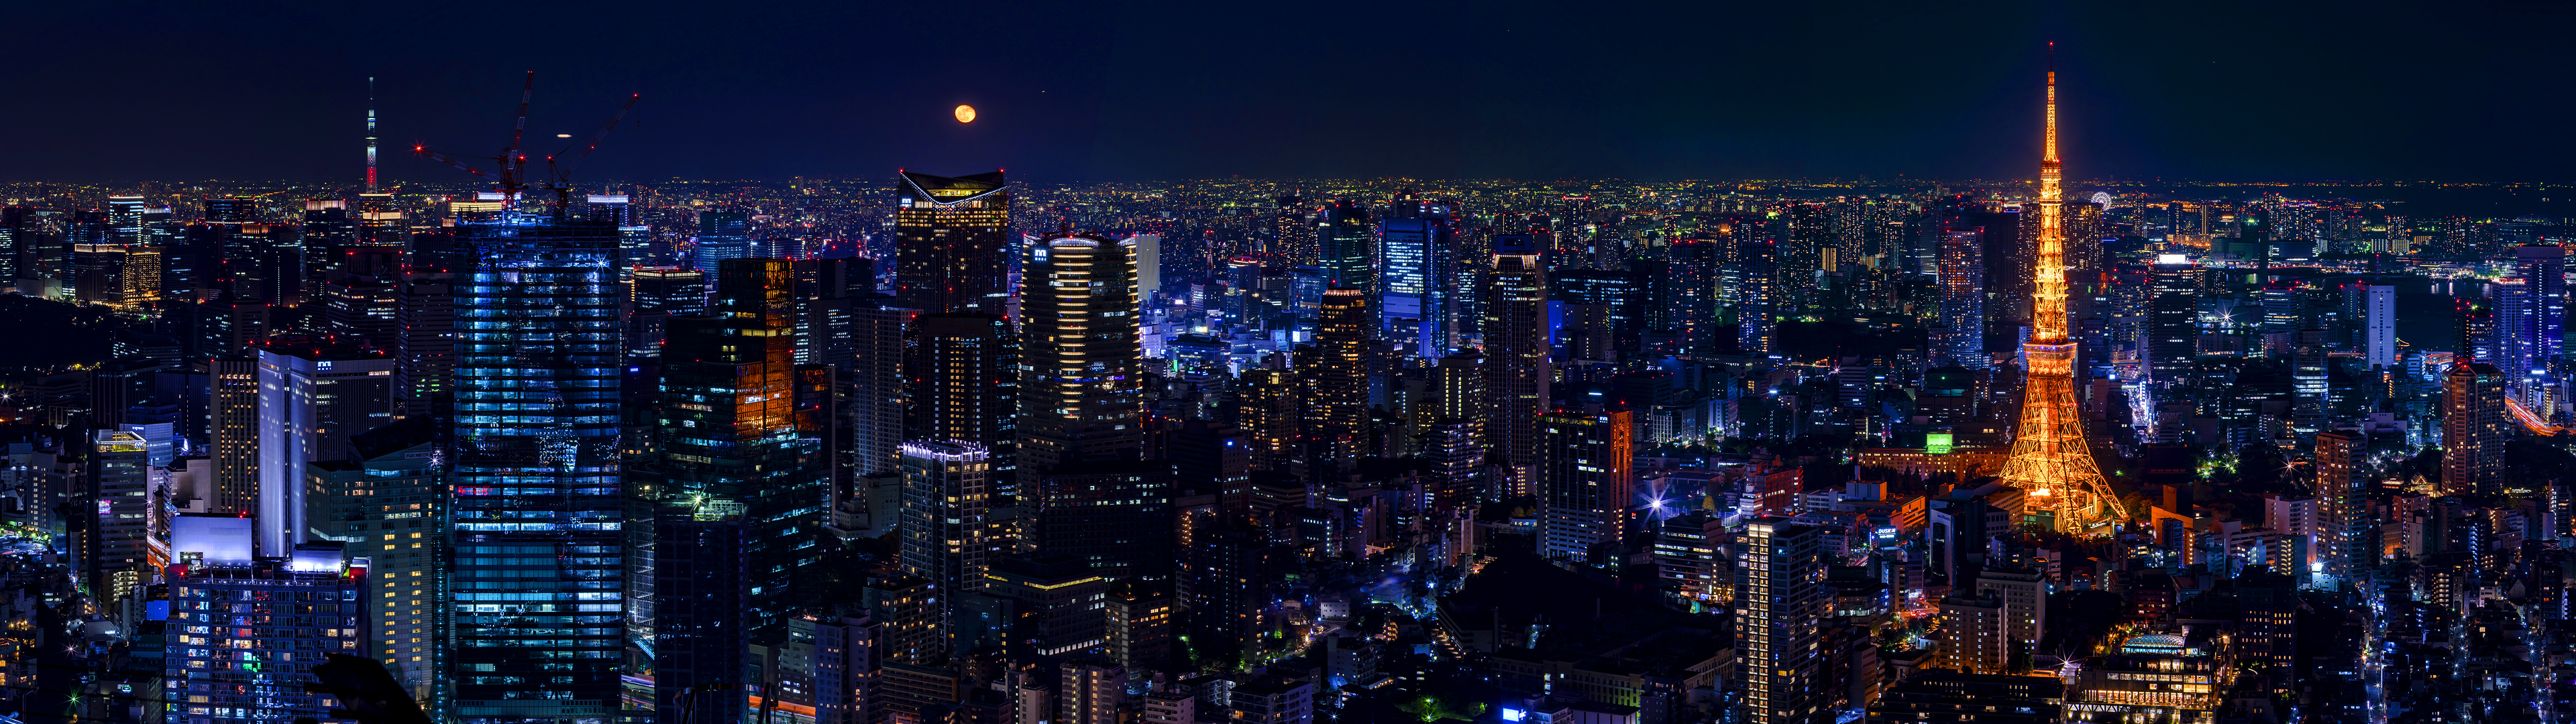 Tokyo Tower, Multiwall art, Architectural beauty, Urban landscape, 3840x1080 Dual Screen Desktop